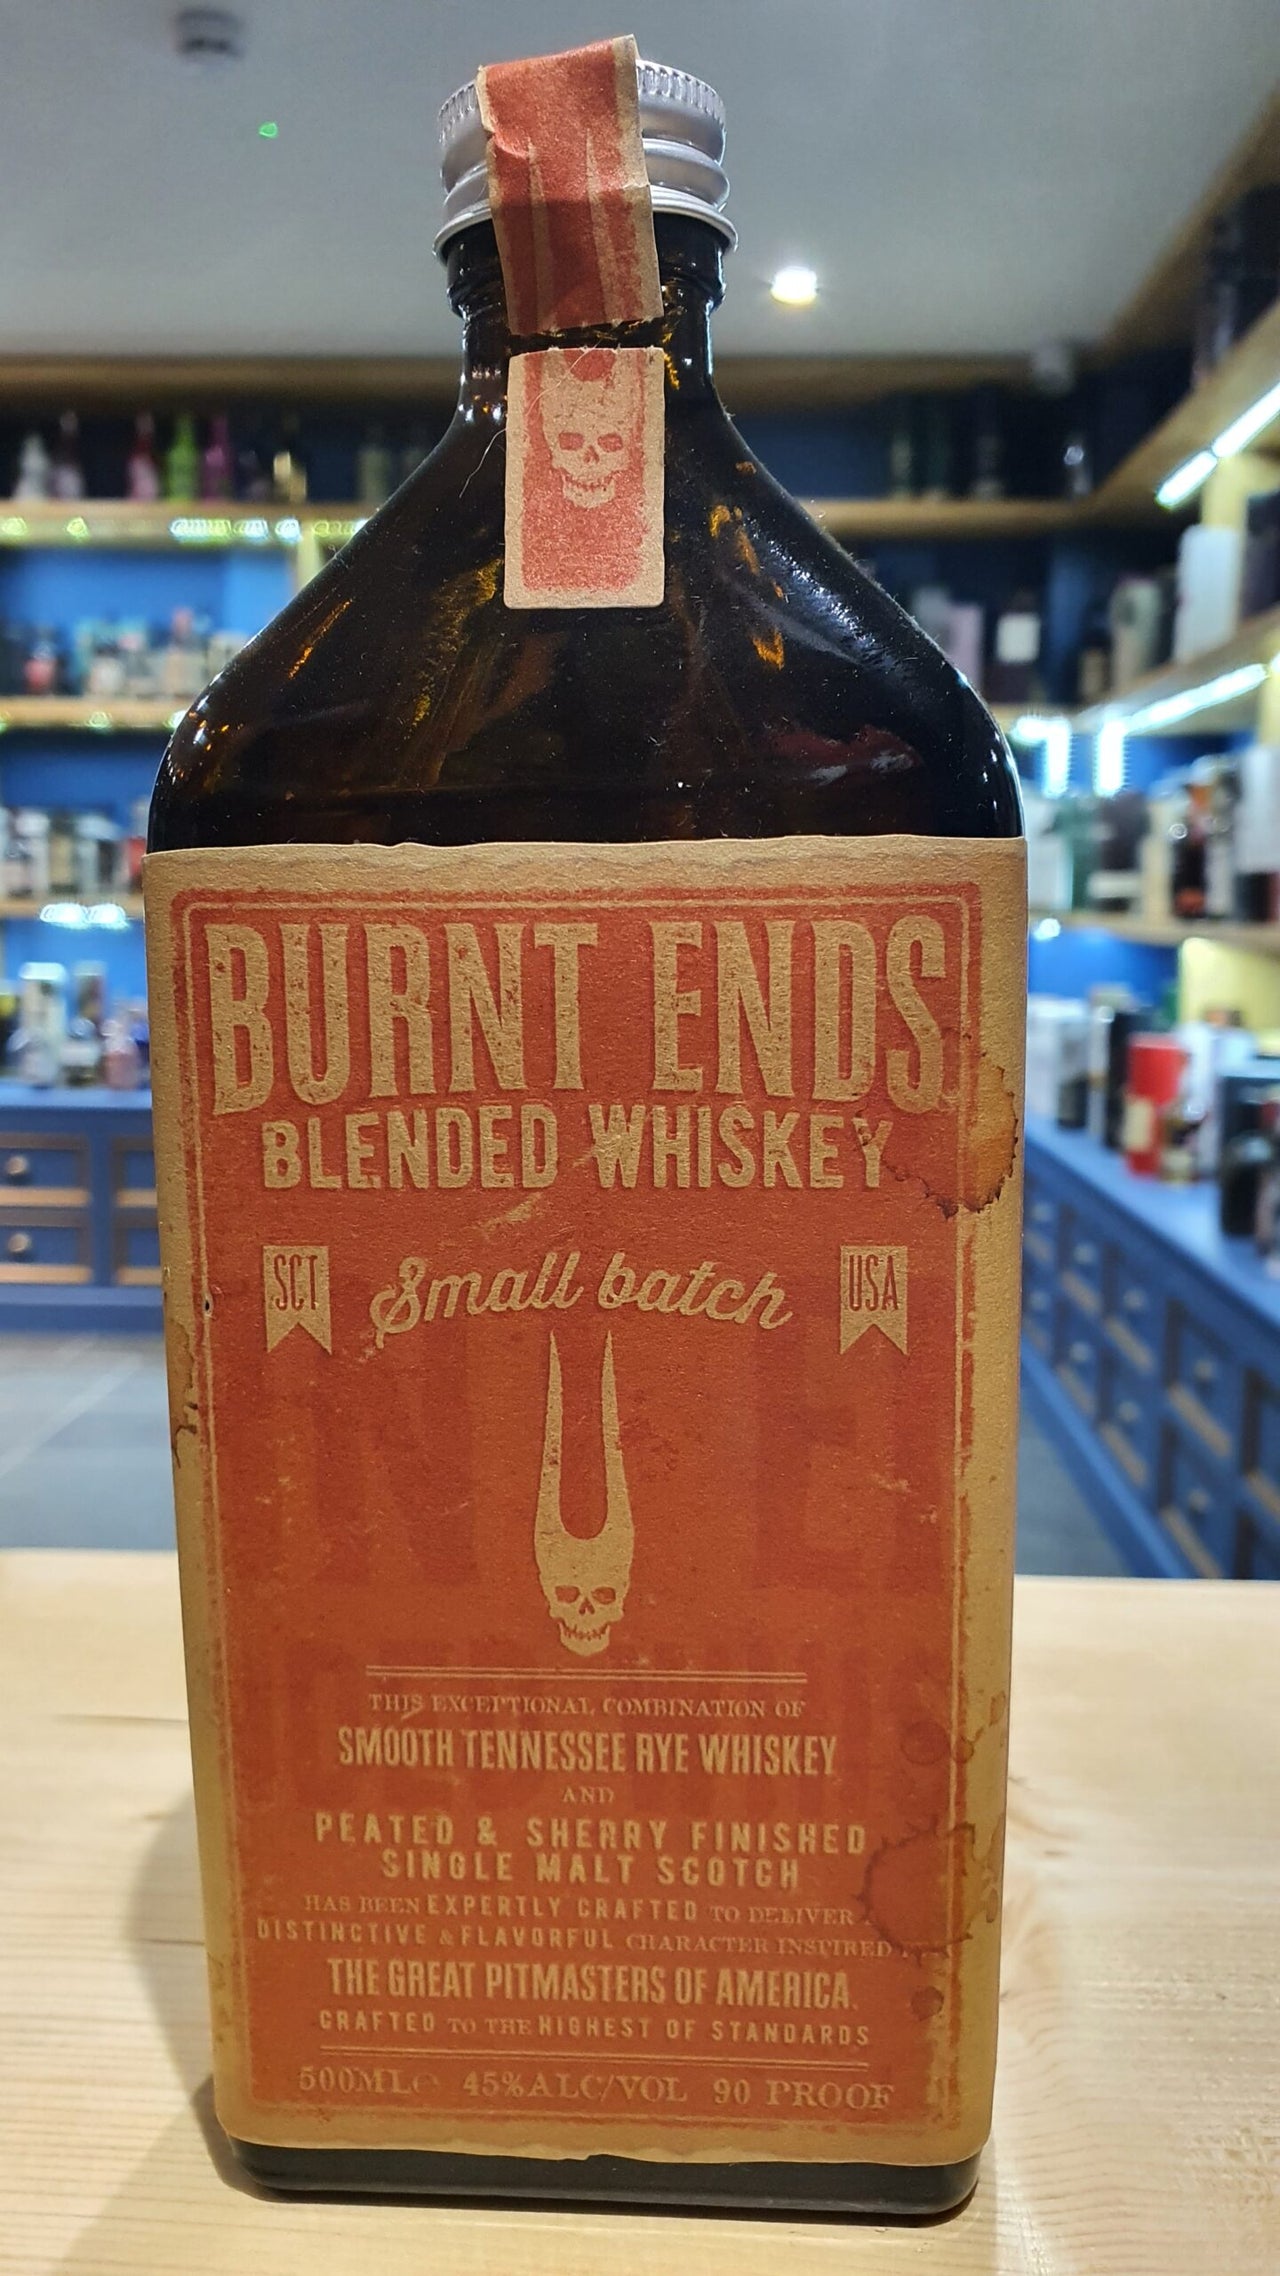 Islas Bar - Burnt Ends Blended Whiskey 45% 2.5cl